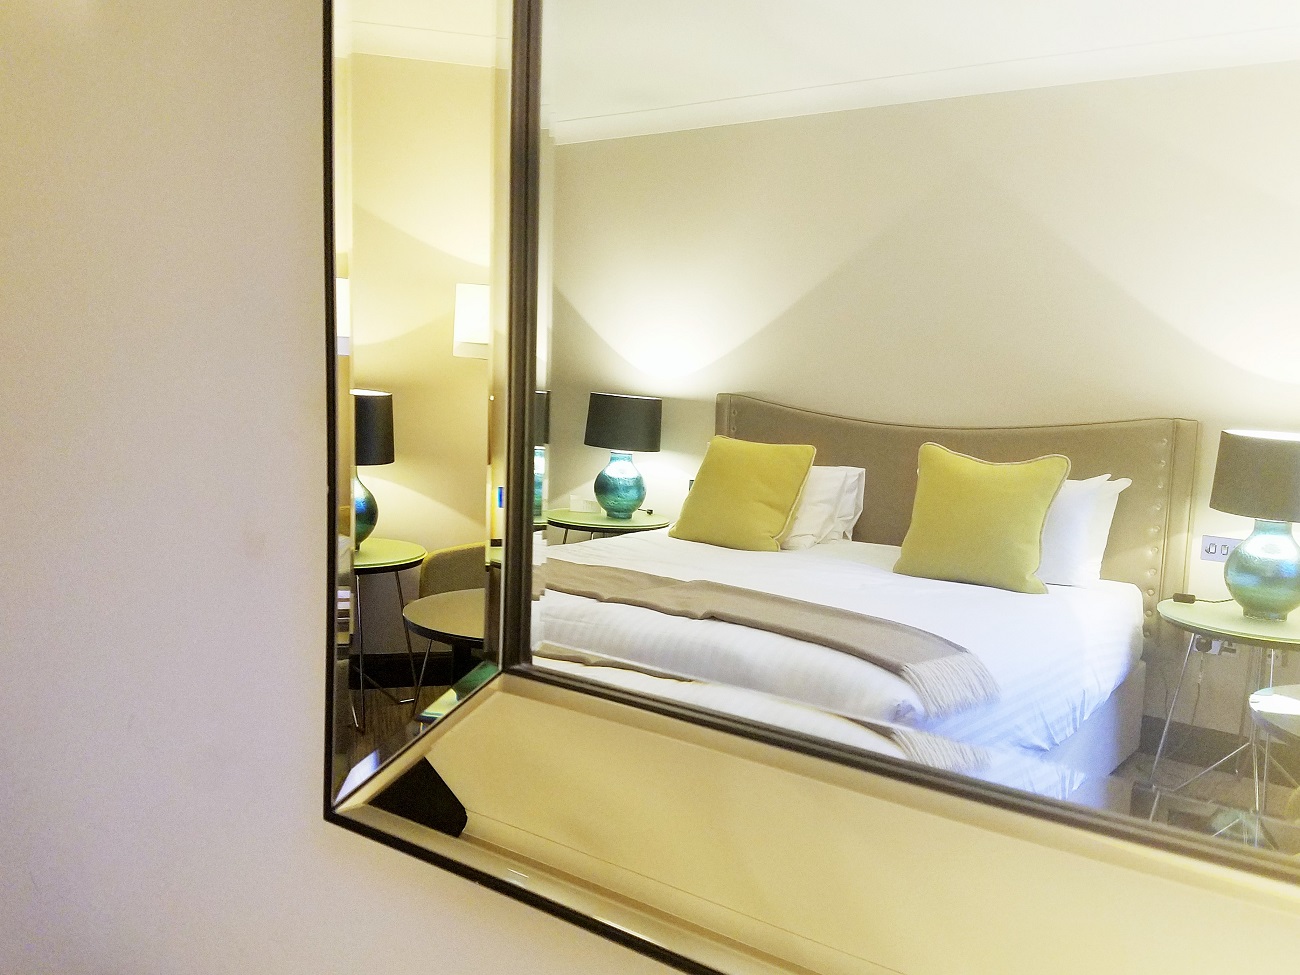 Royal Berkshire Hotel family room mirror reflection yellow cushions